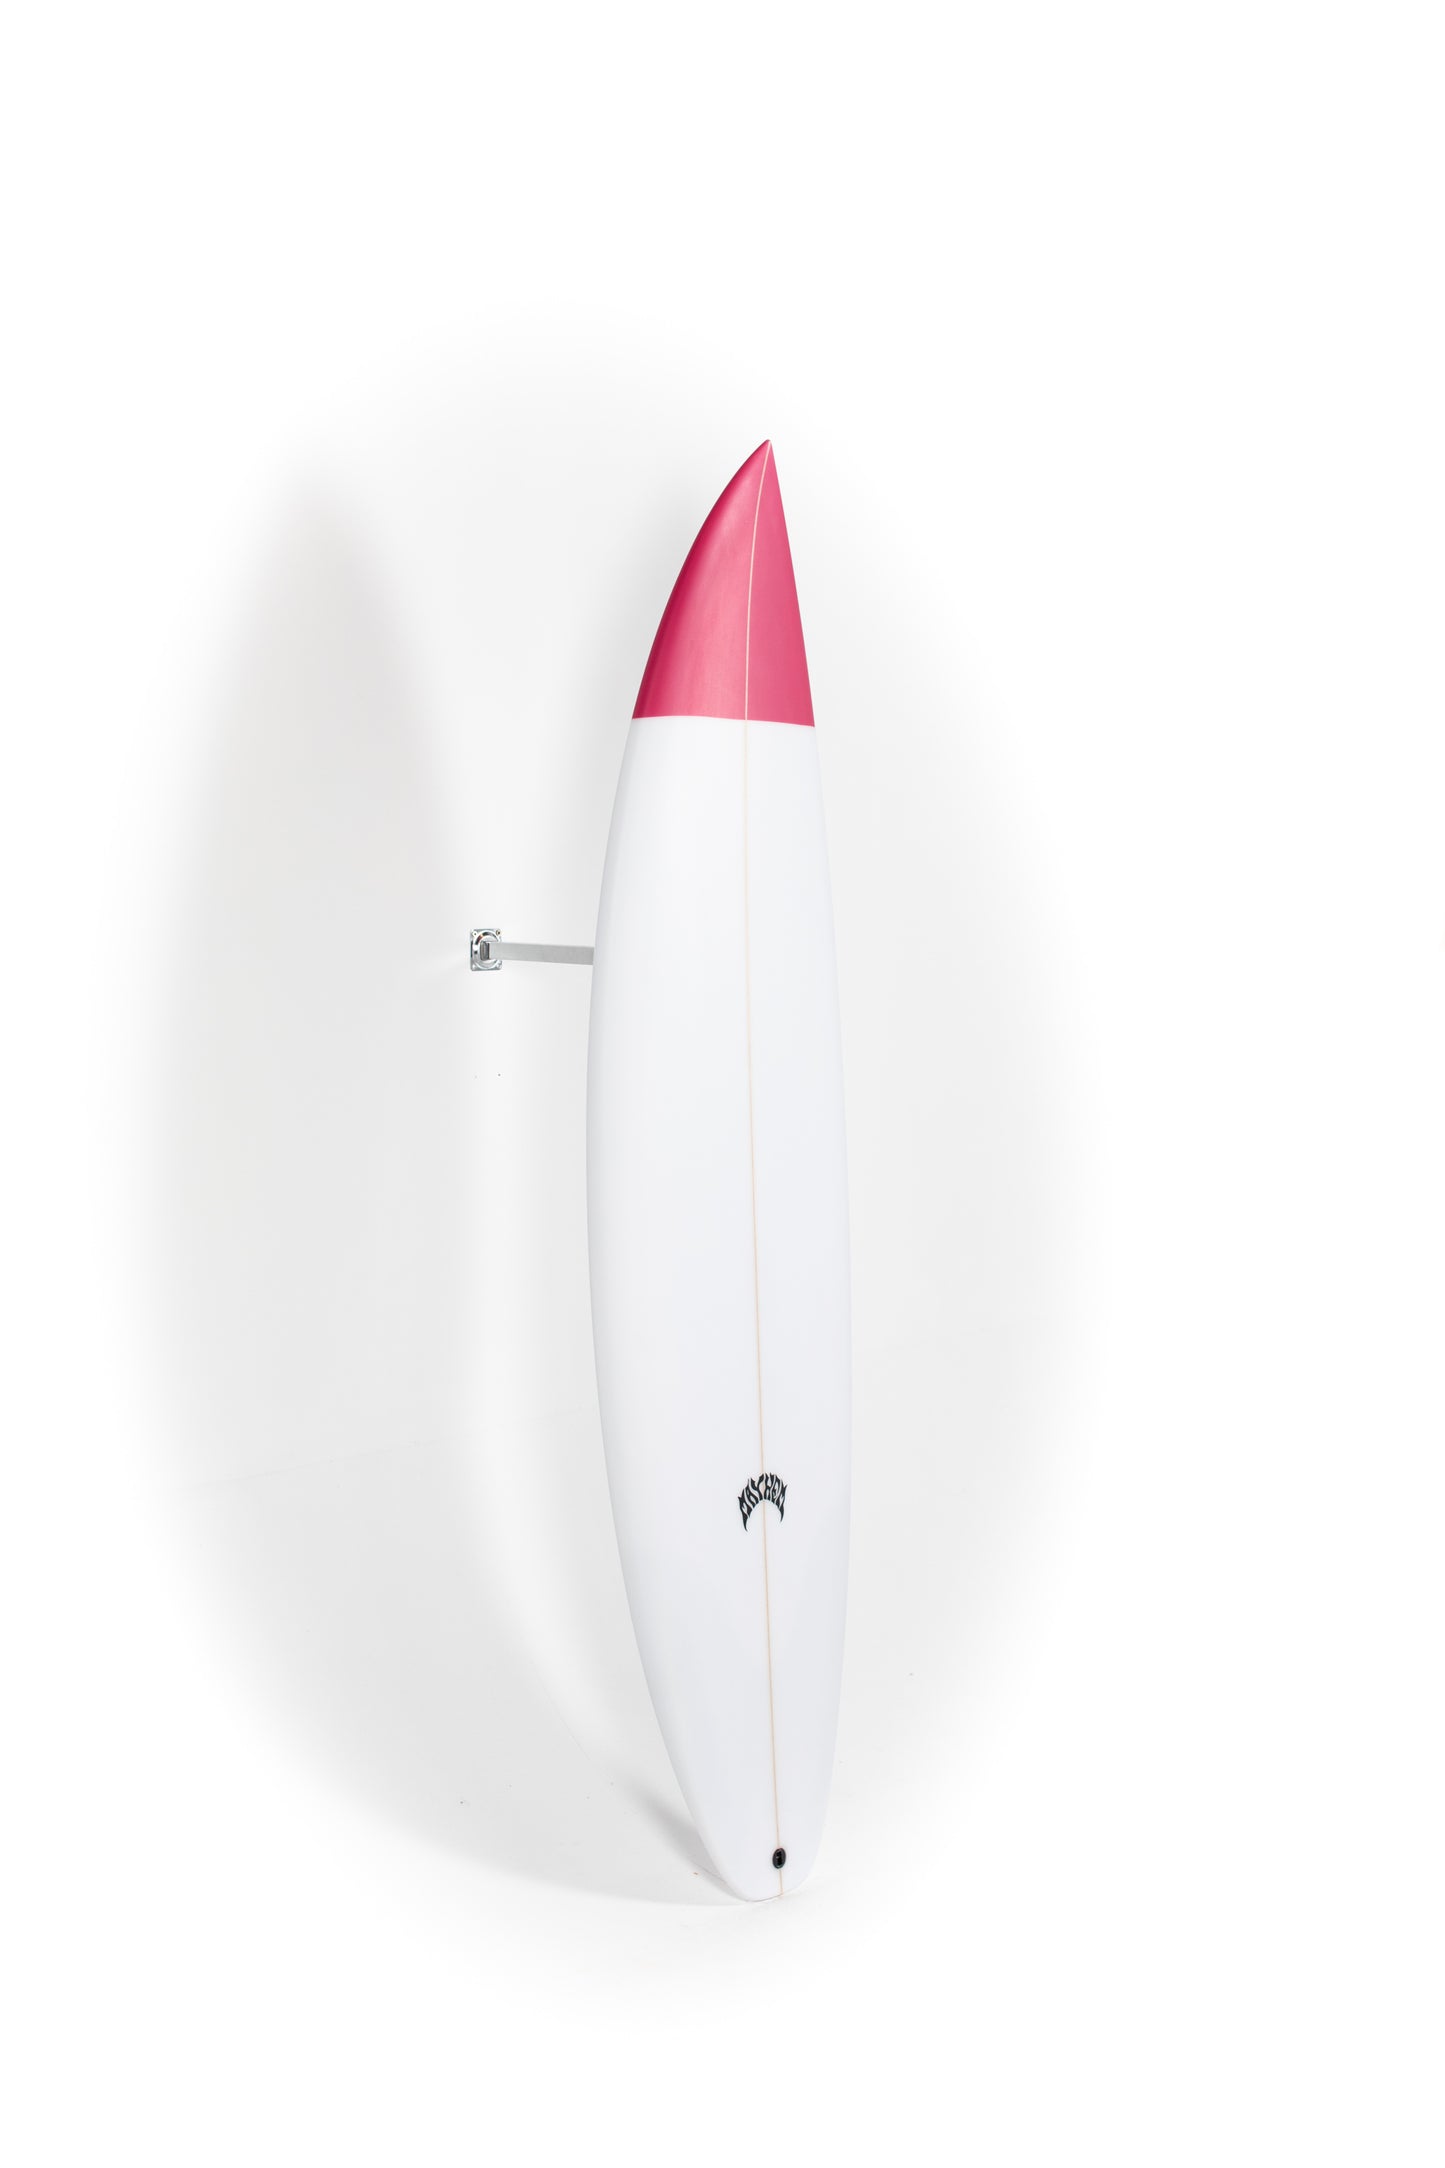 
                  
                    Pukas Surf shop - Lost Surfboards - DRIVER 3.0 by Matt Biolos - 6'4" x 19 7/8 x 2 11/16 x 34,55L - MH15395
                  
                